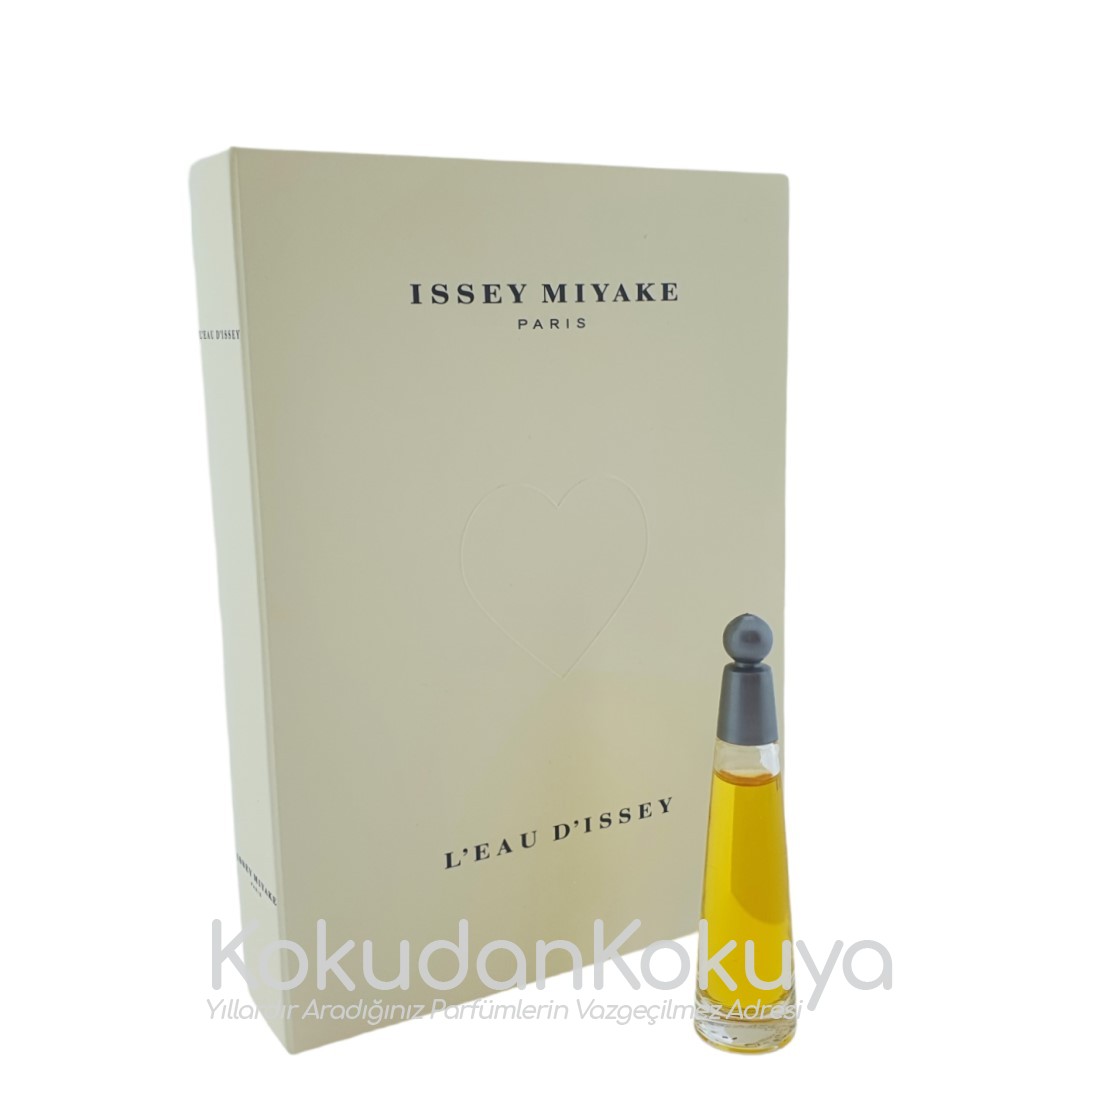 ISSEY MIYAKE L'Eau D'Issey (Vintage) Parfüm Kadın 3ml Minyatür (Mini Perfume) Dökme 